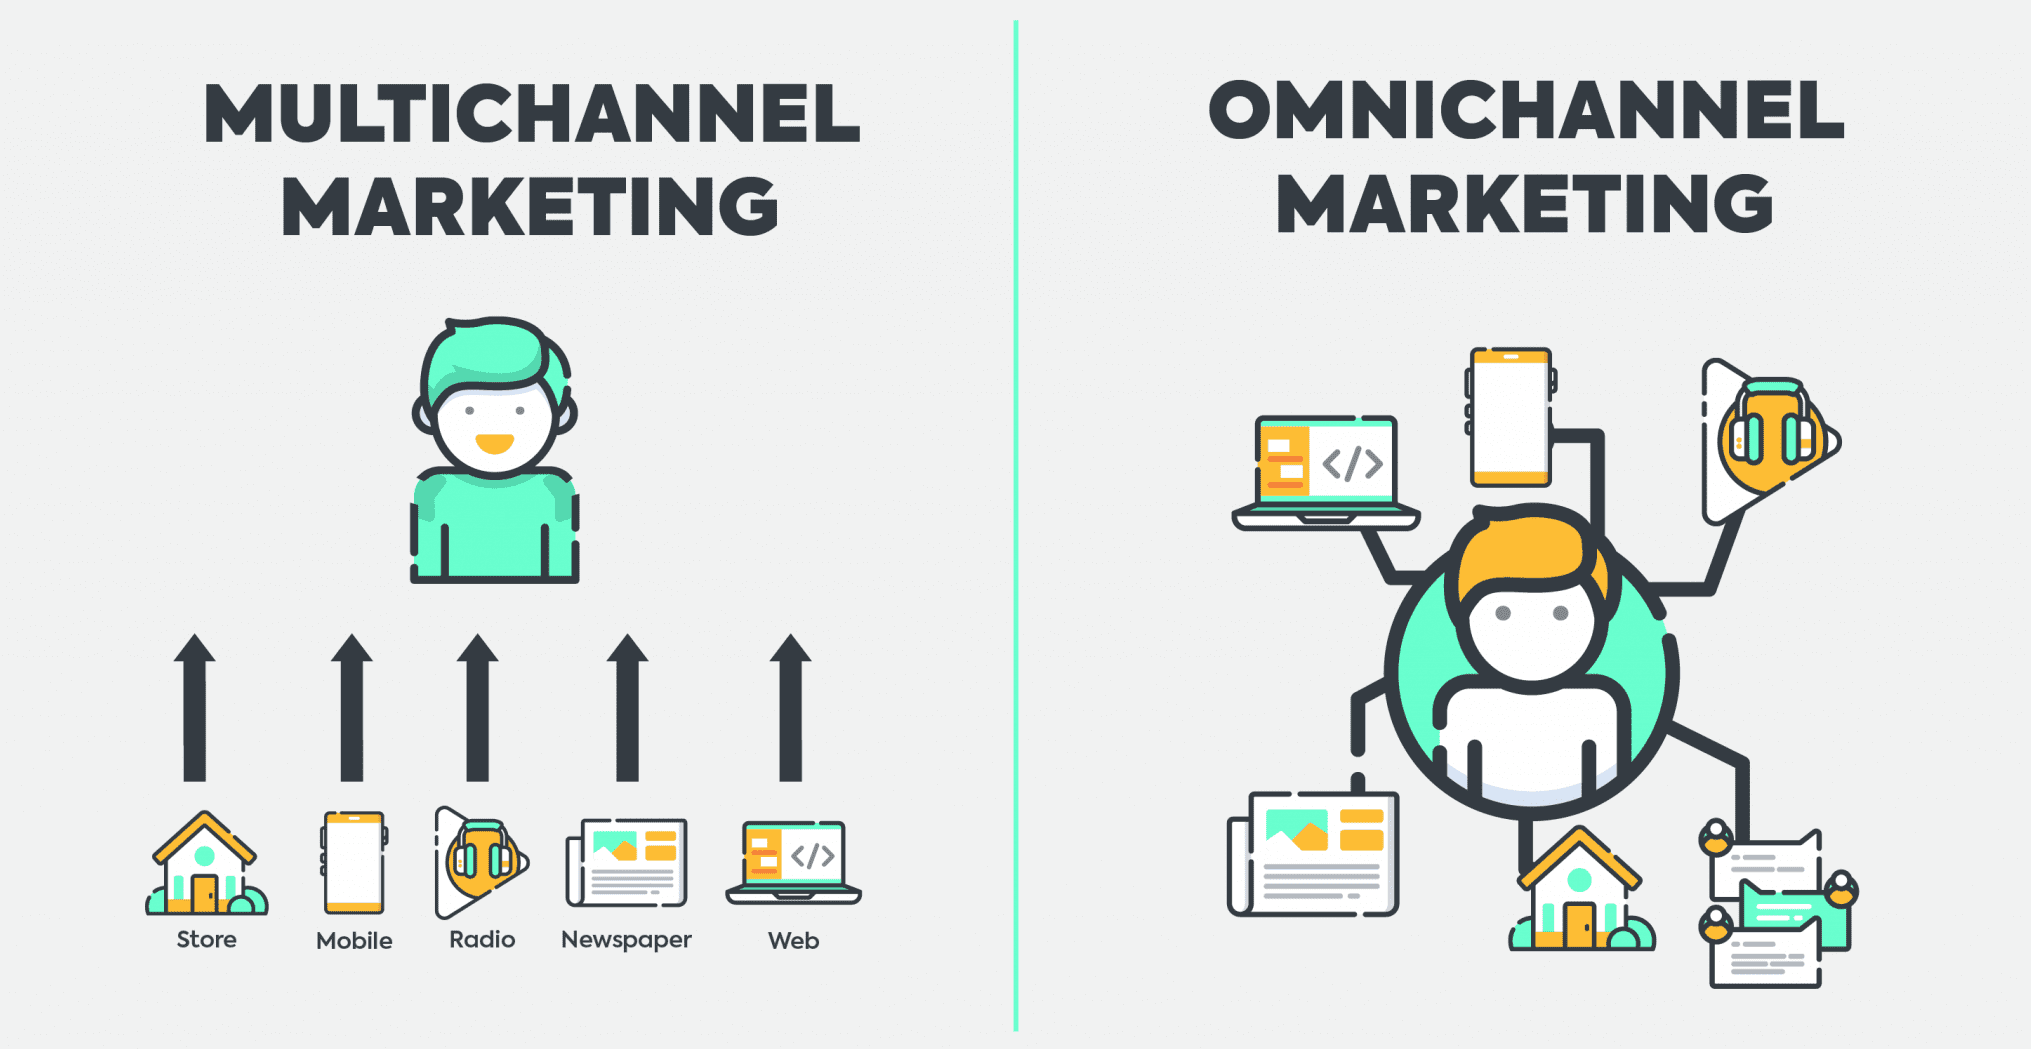 OmniChannel Marketing